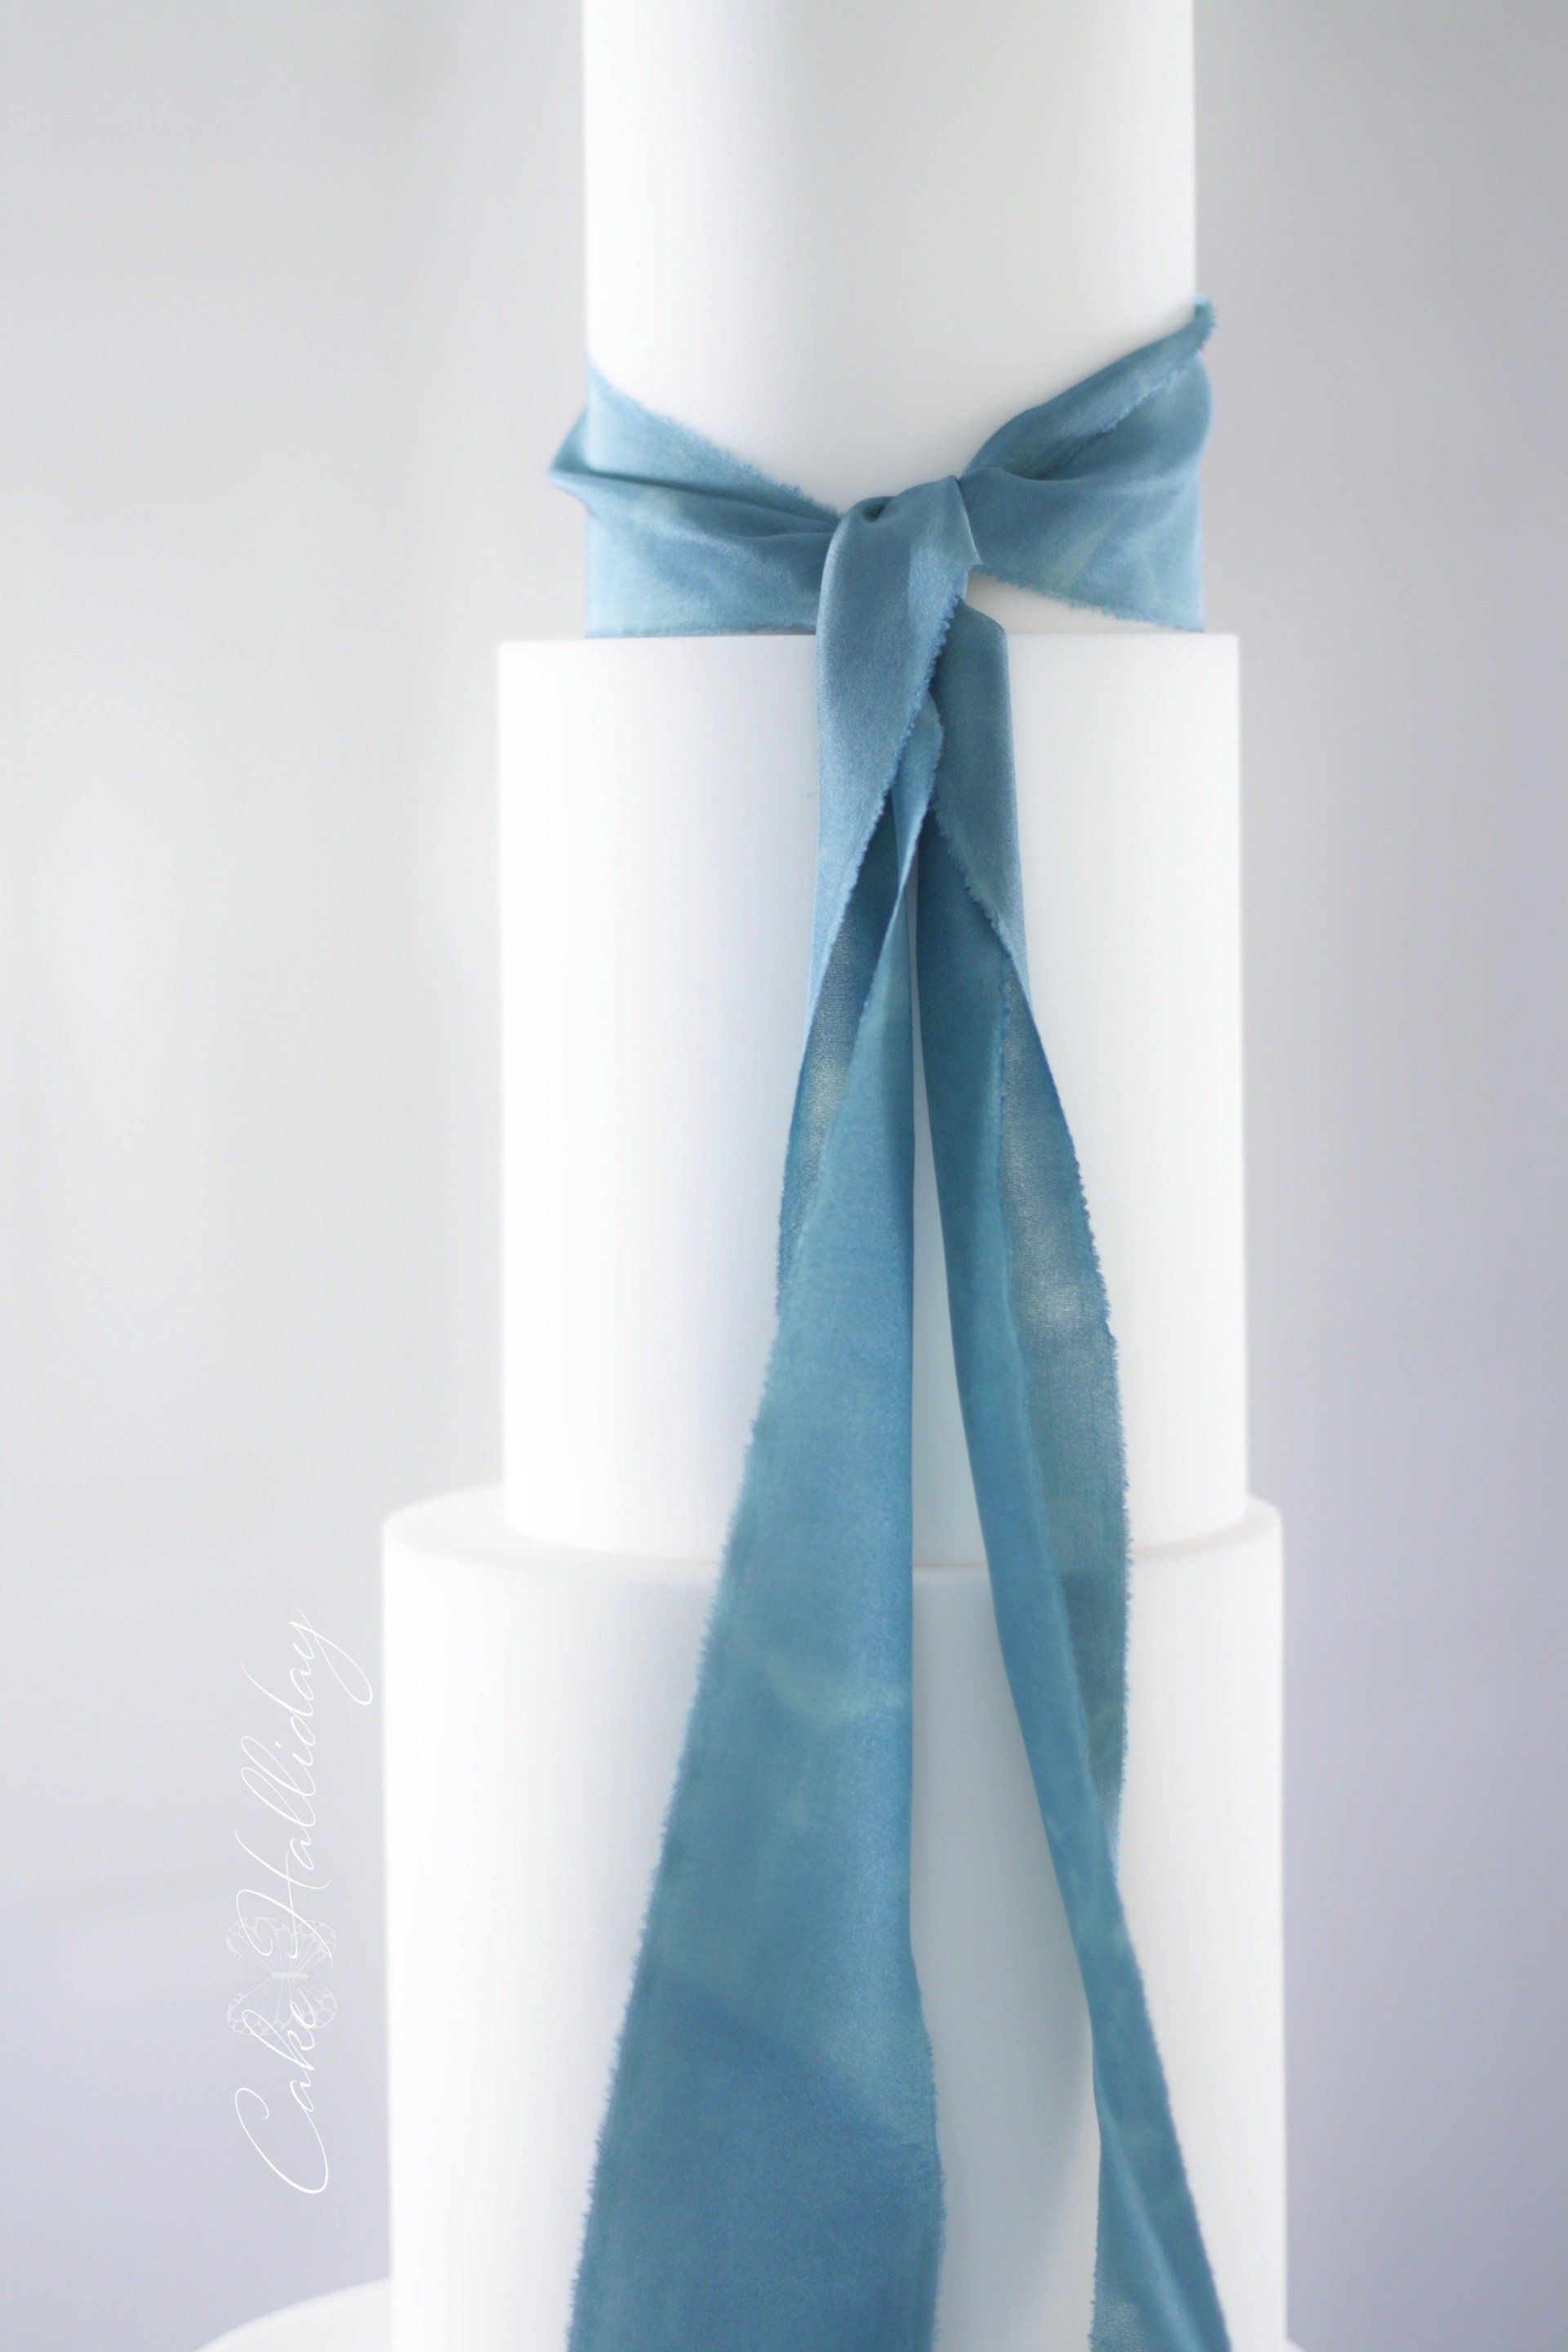 Minimalist wedding cake with teal silk ribbon